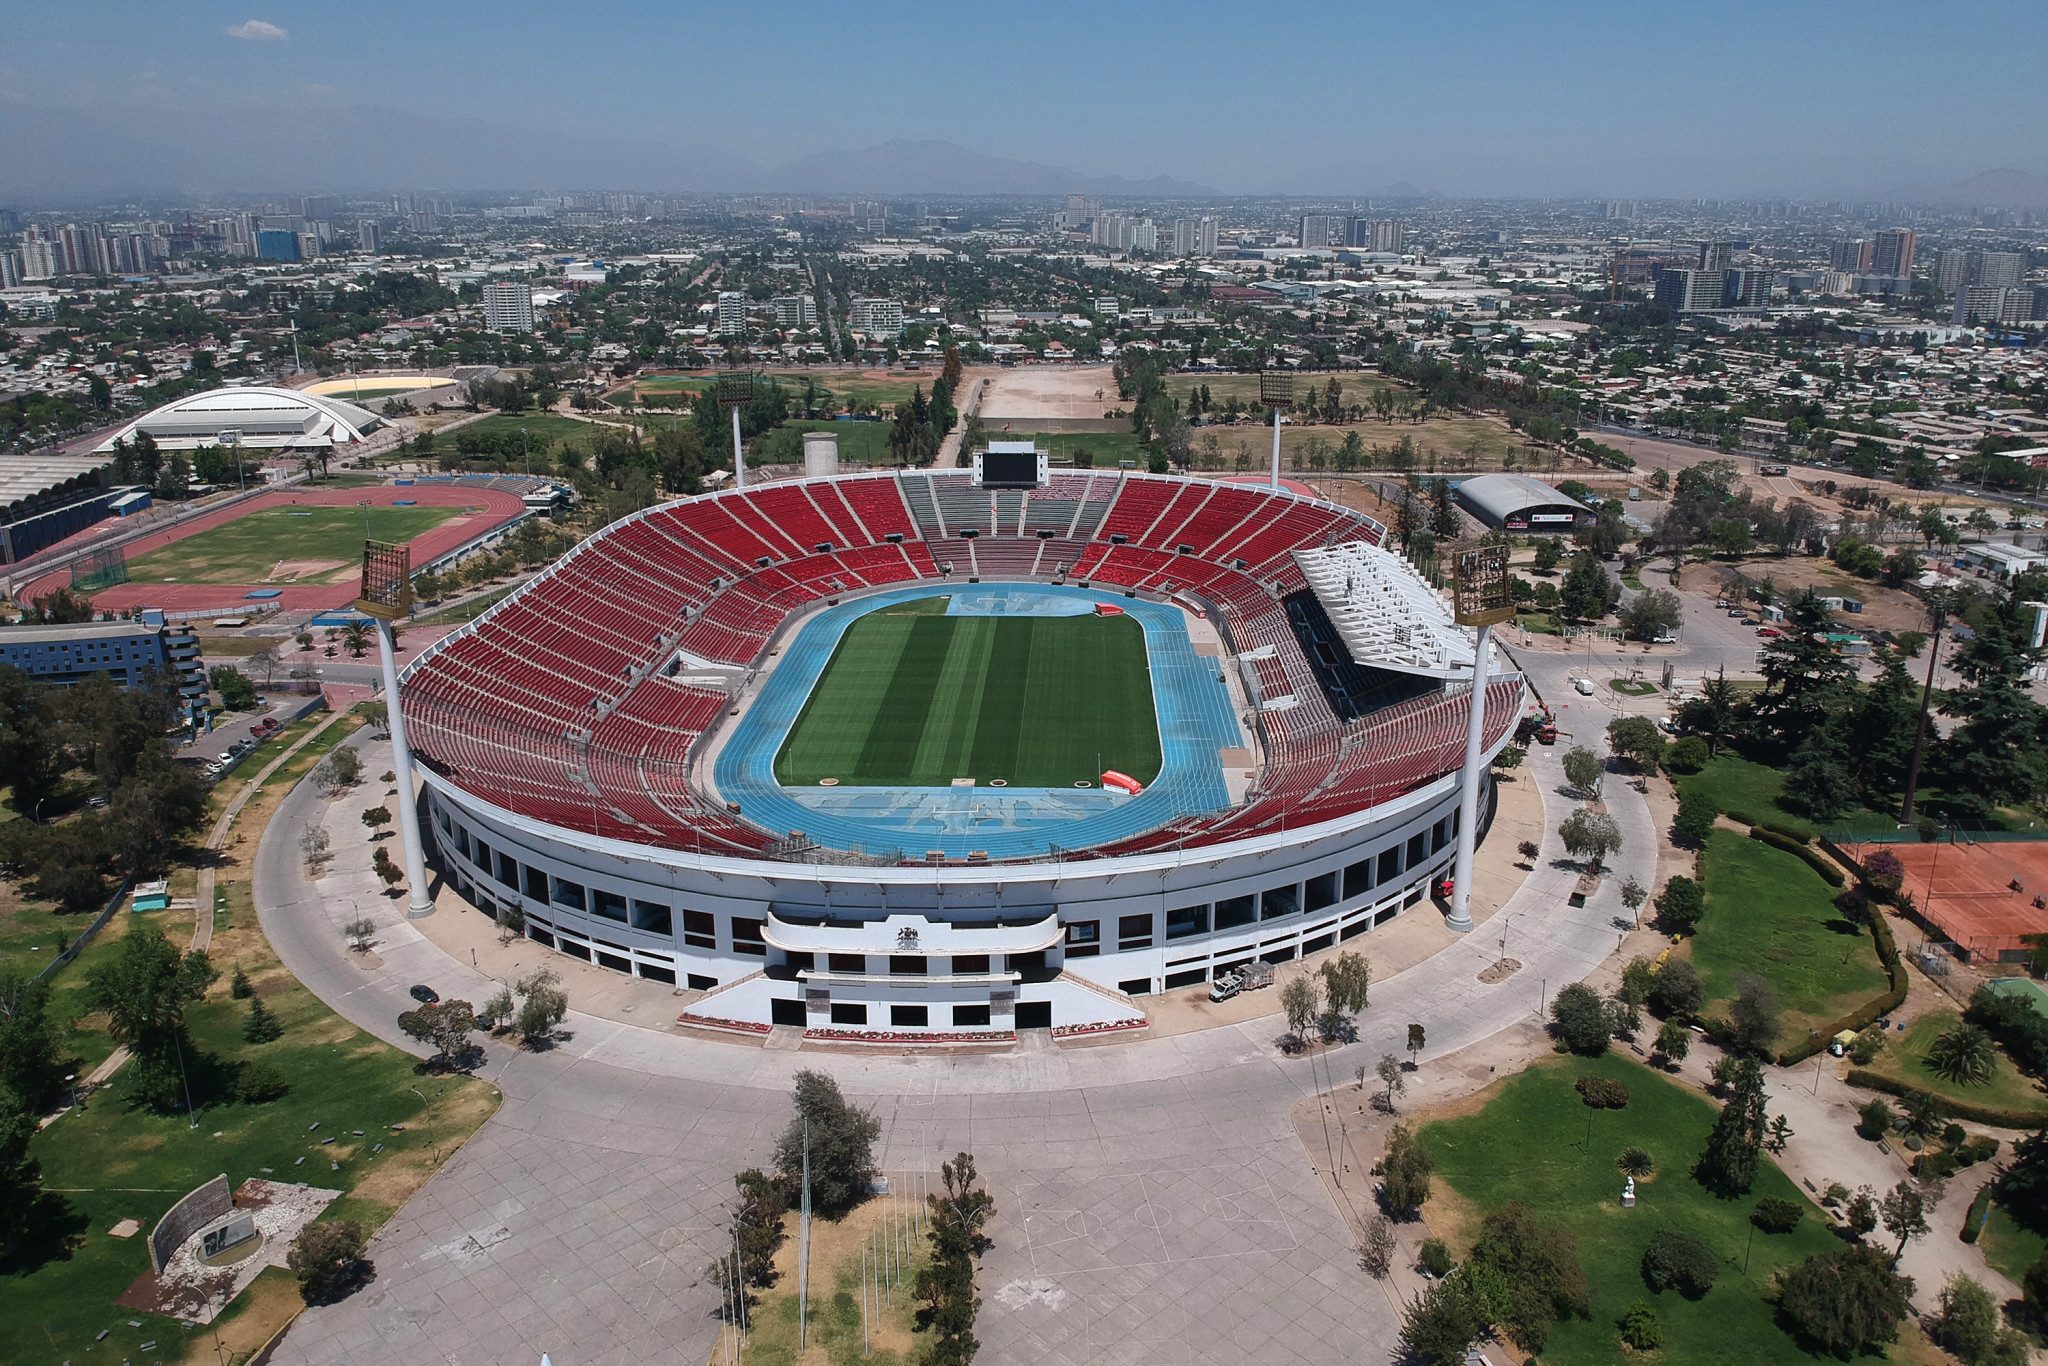 The Estadio Nacional Julio Martínez Prádanos is one of 12 venues on the National Stadium Sports Park site for Santiago 2023 ©Getty Images